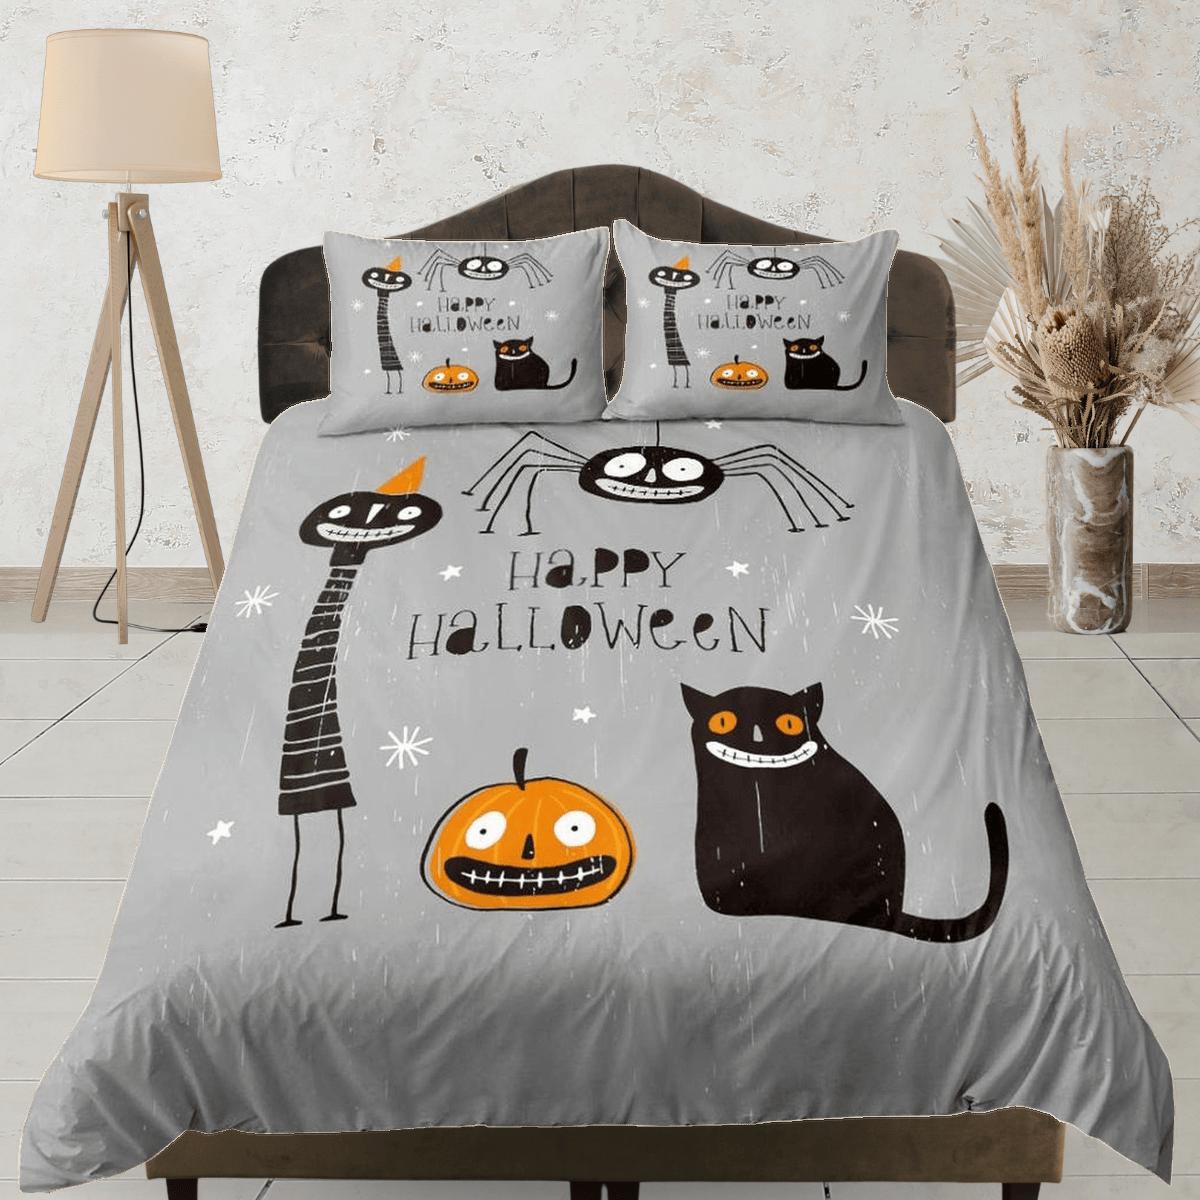 daintyduvet Smiling pumpkin black cat spider halloween bedding & pillowcase, grey duvet cover set dorm bedding, nursery toddler bedding, halloween gift